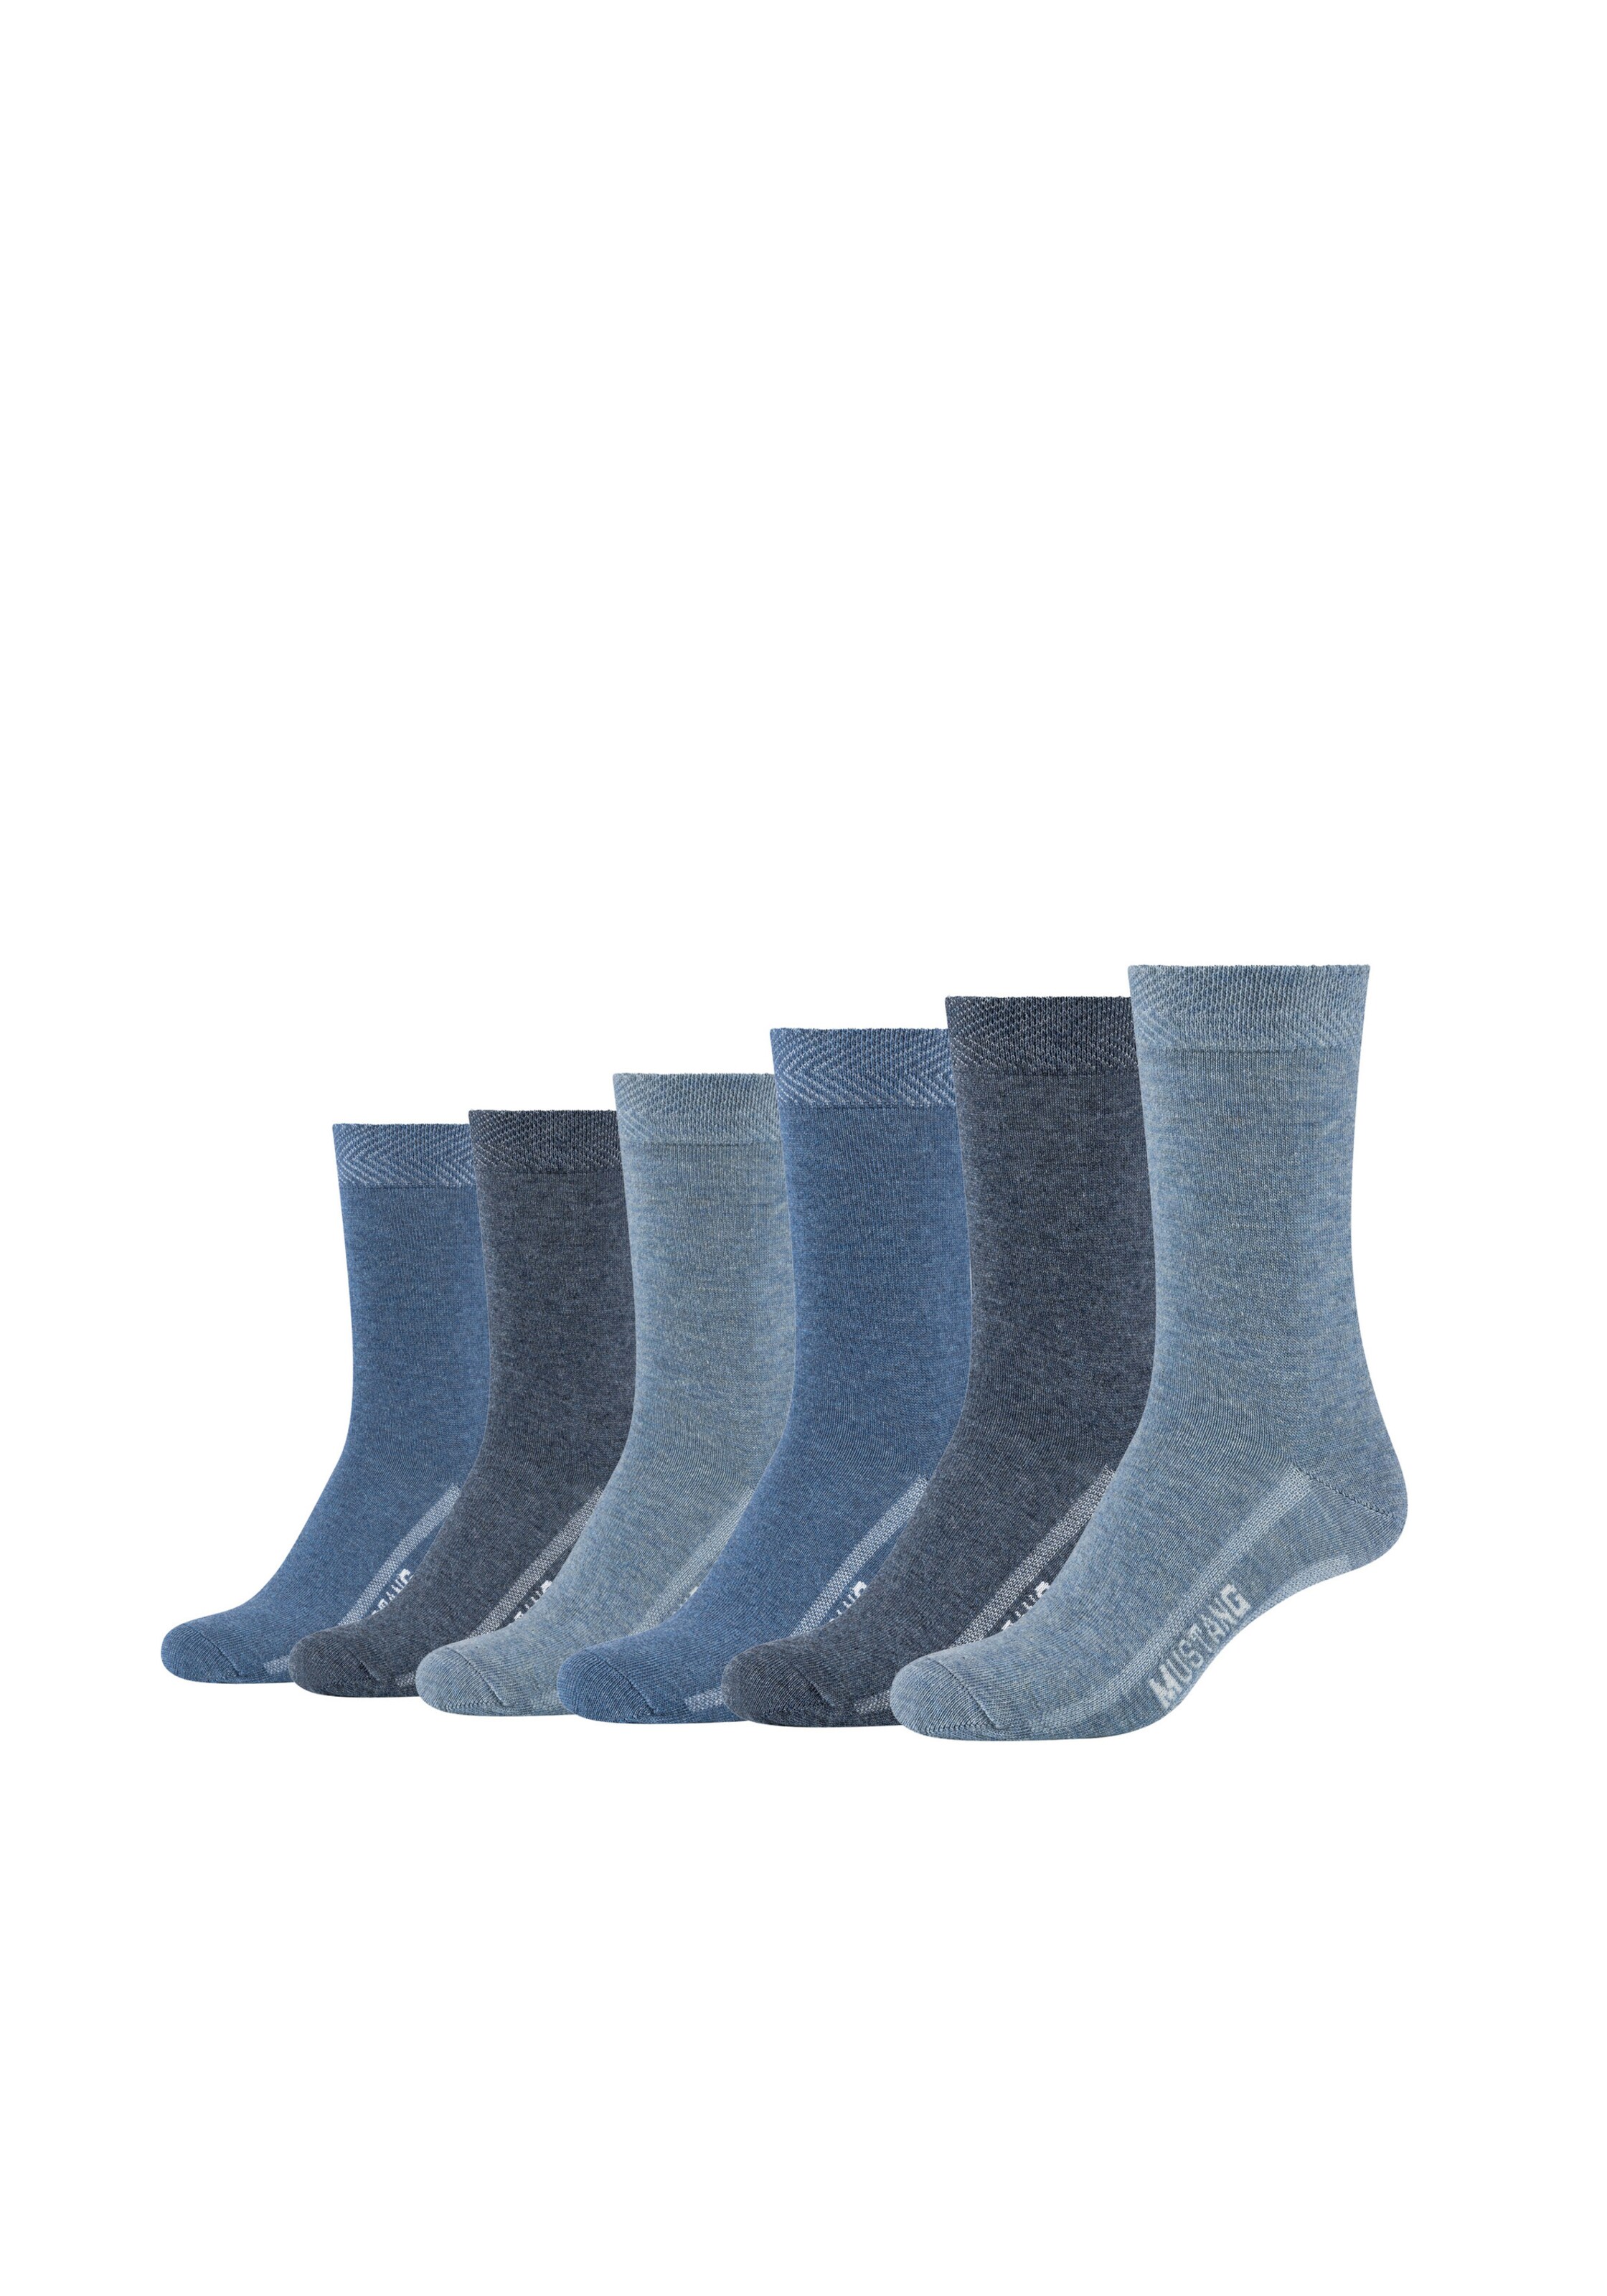 MUSTANG Socken in Blau, Dunkelblau 